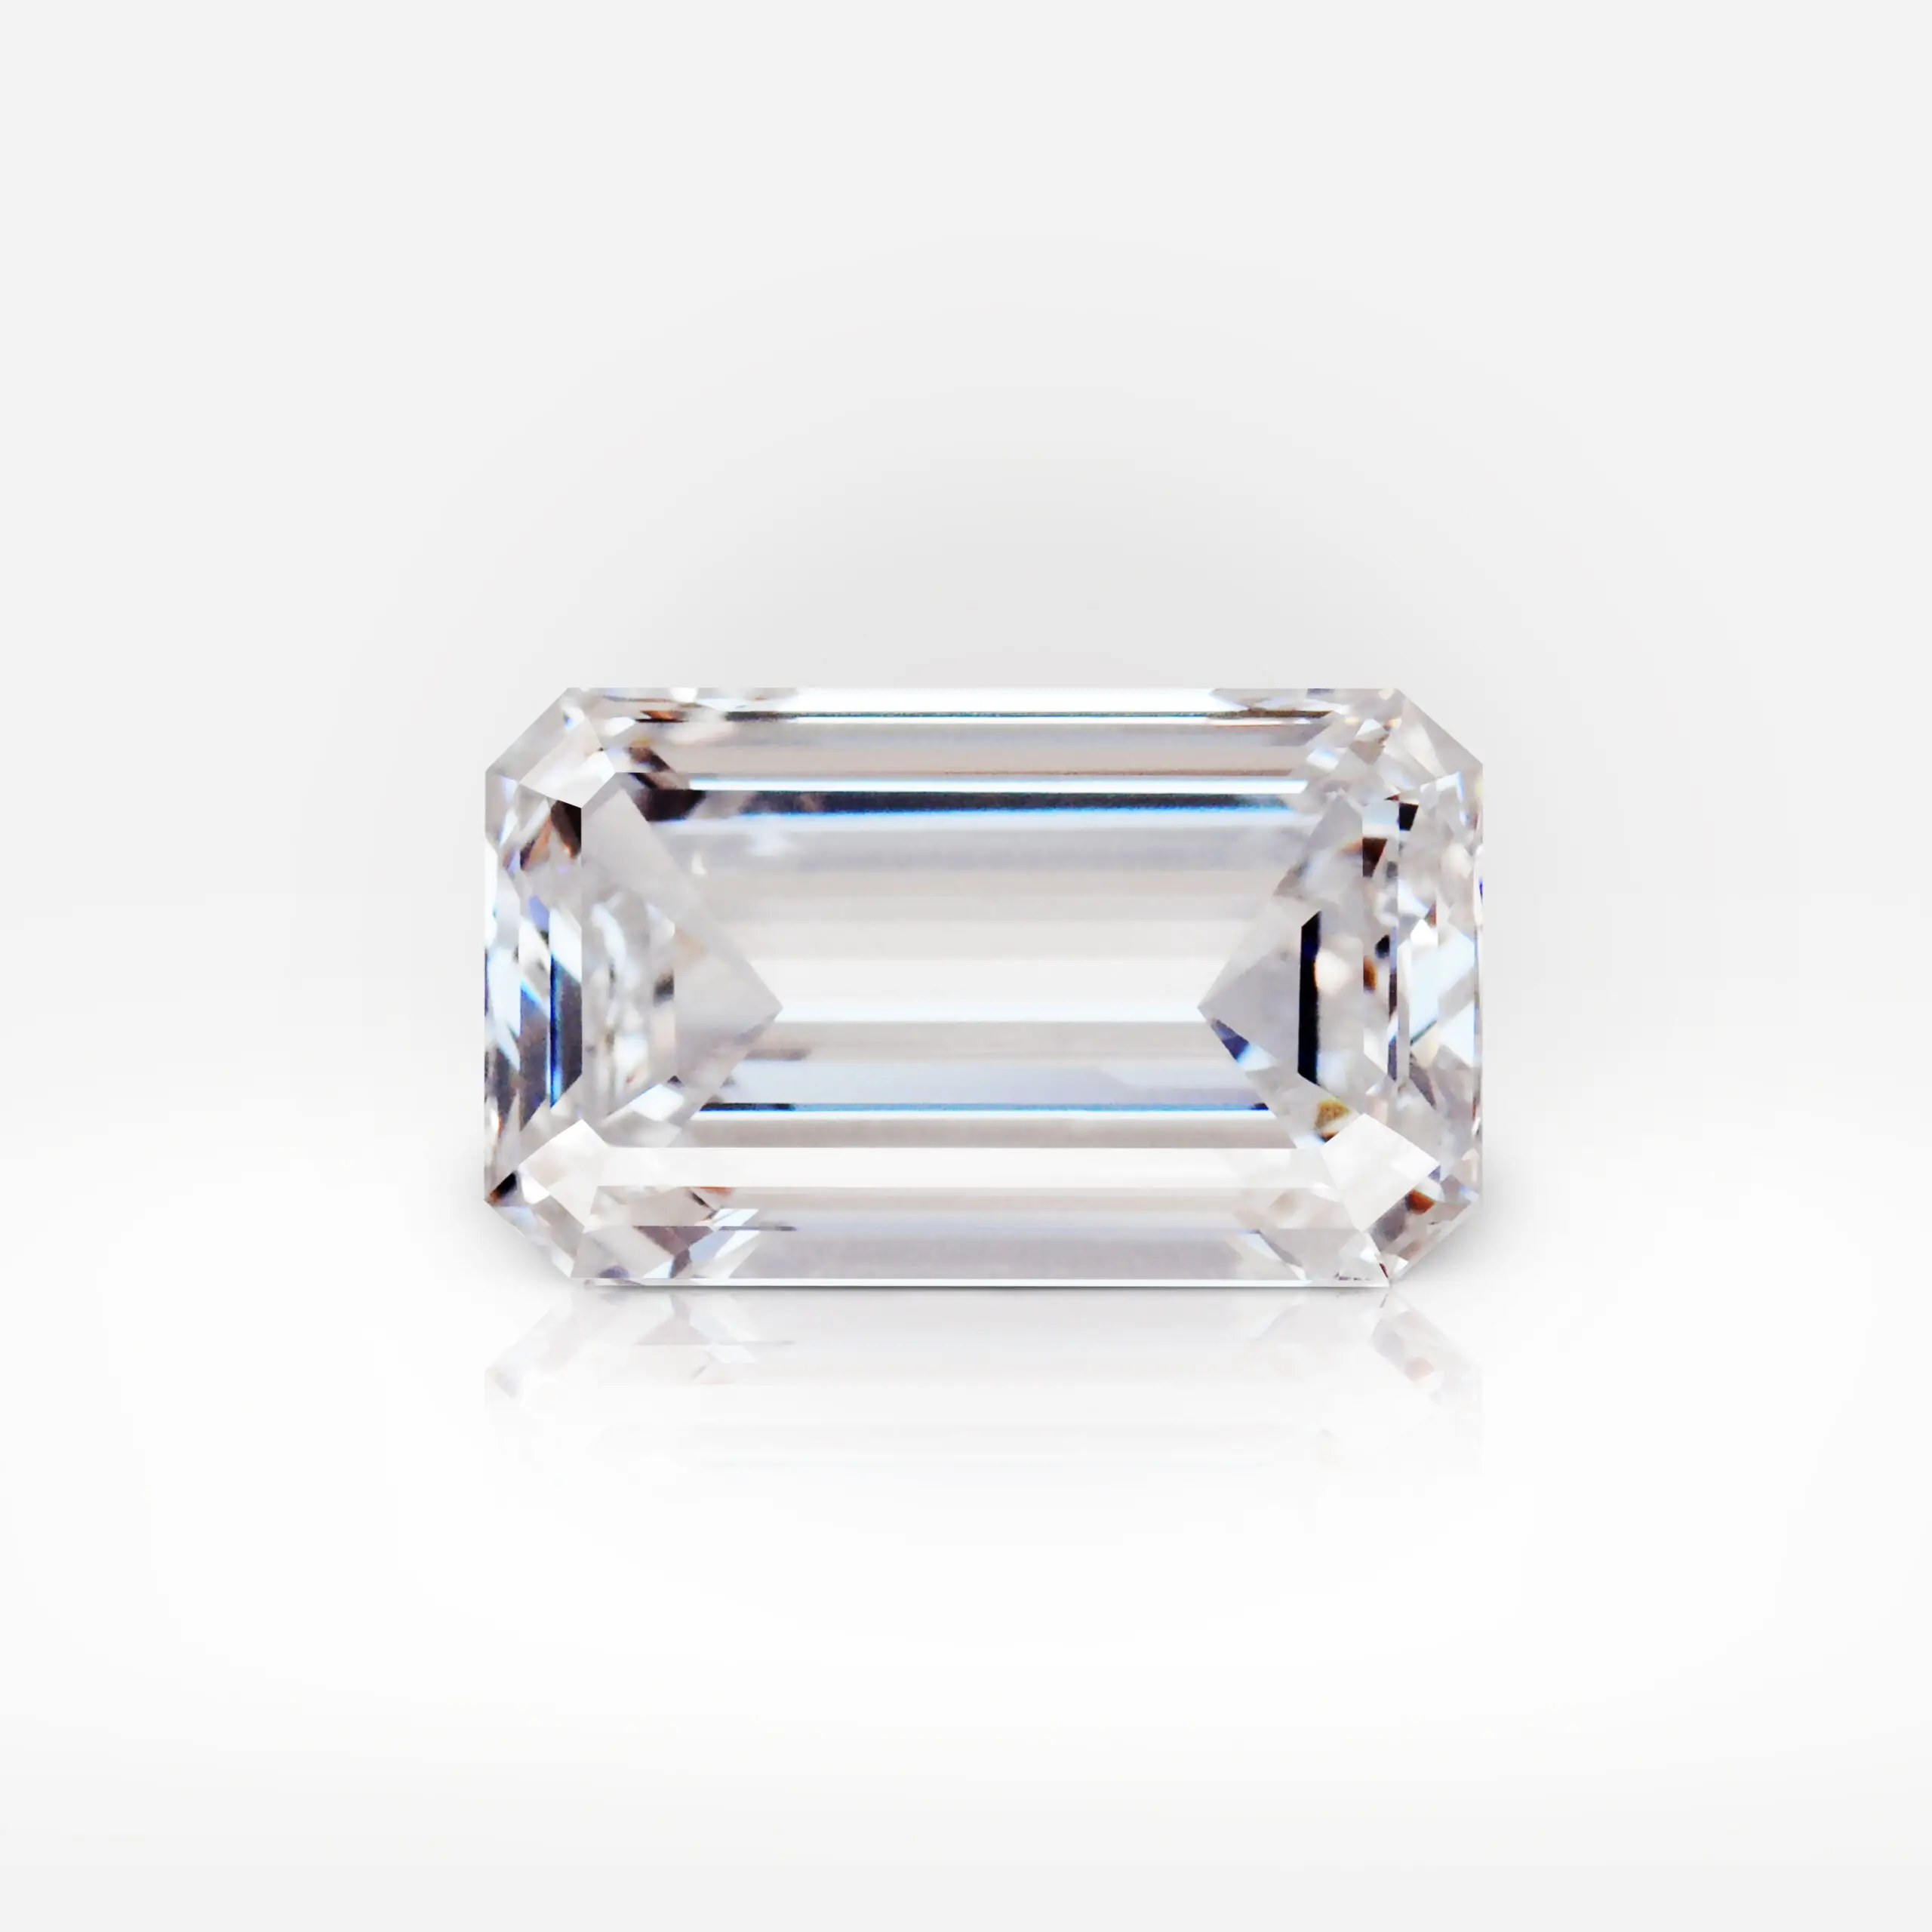 3.02 carat F VVS2 Emerald Shape Diamond GIA - picture 1